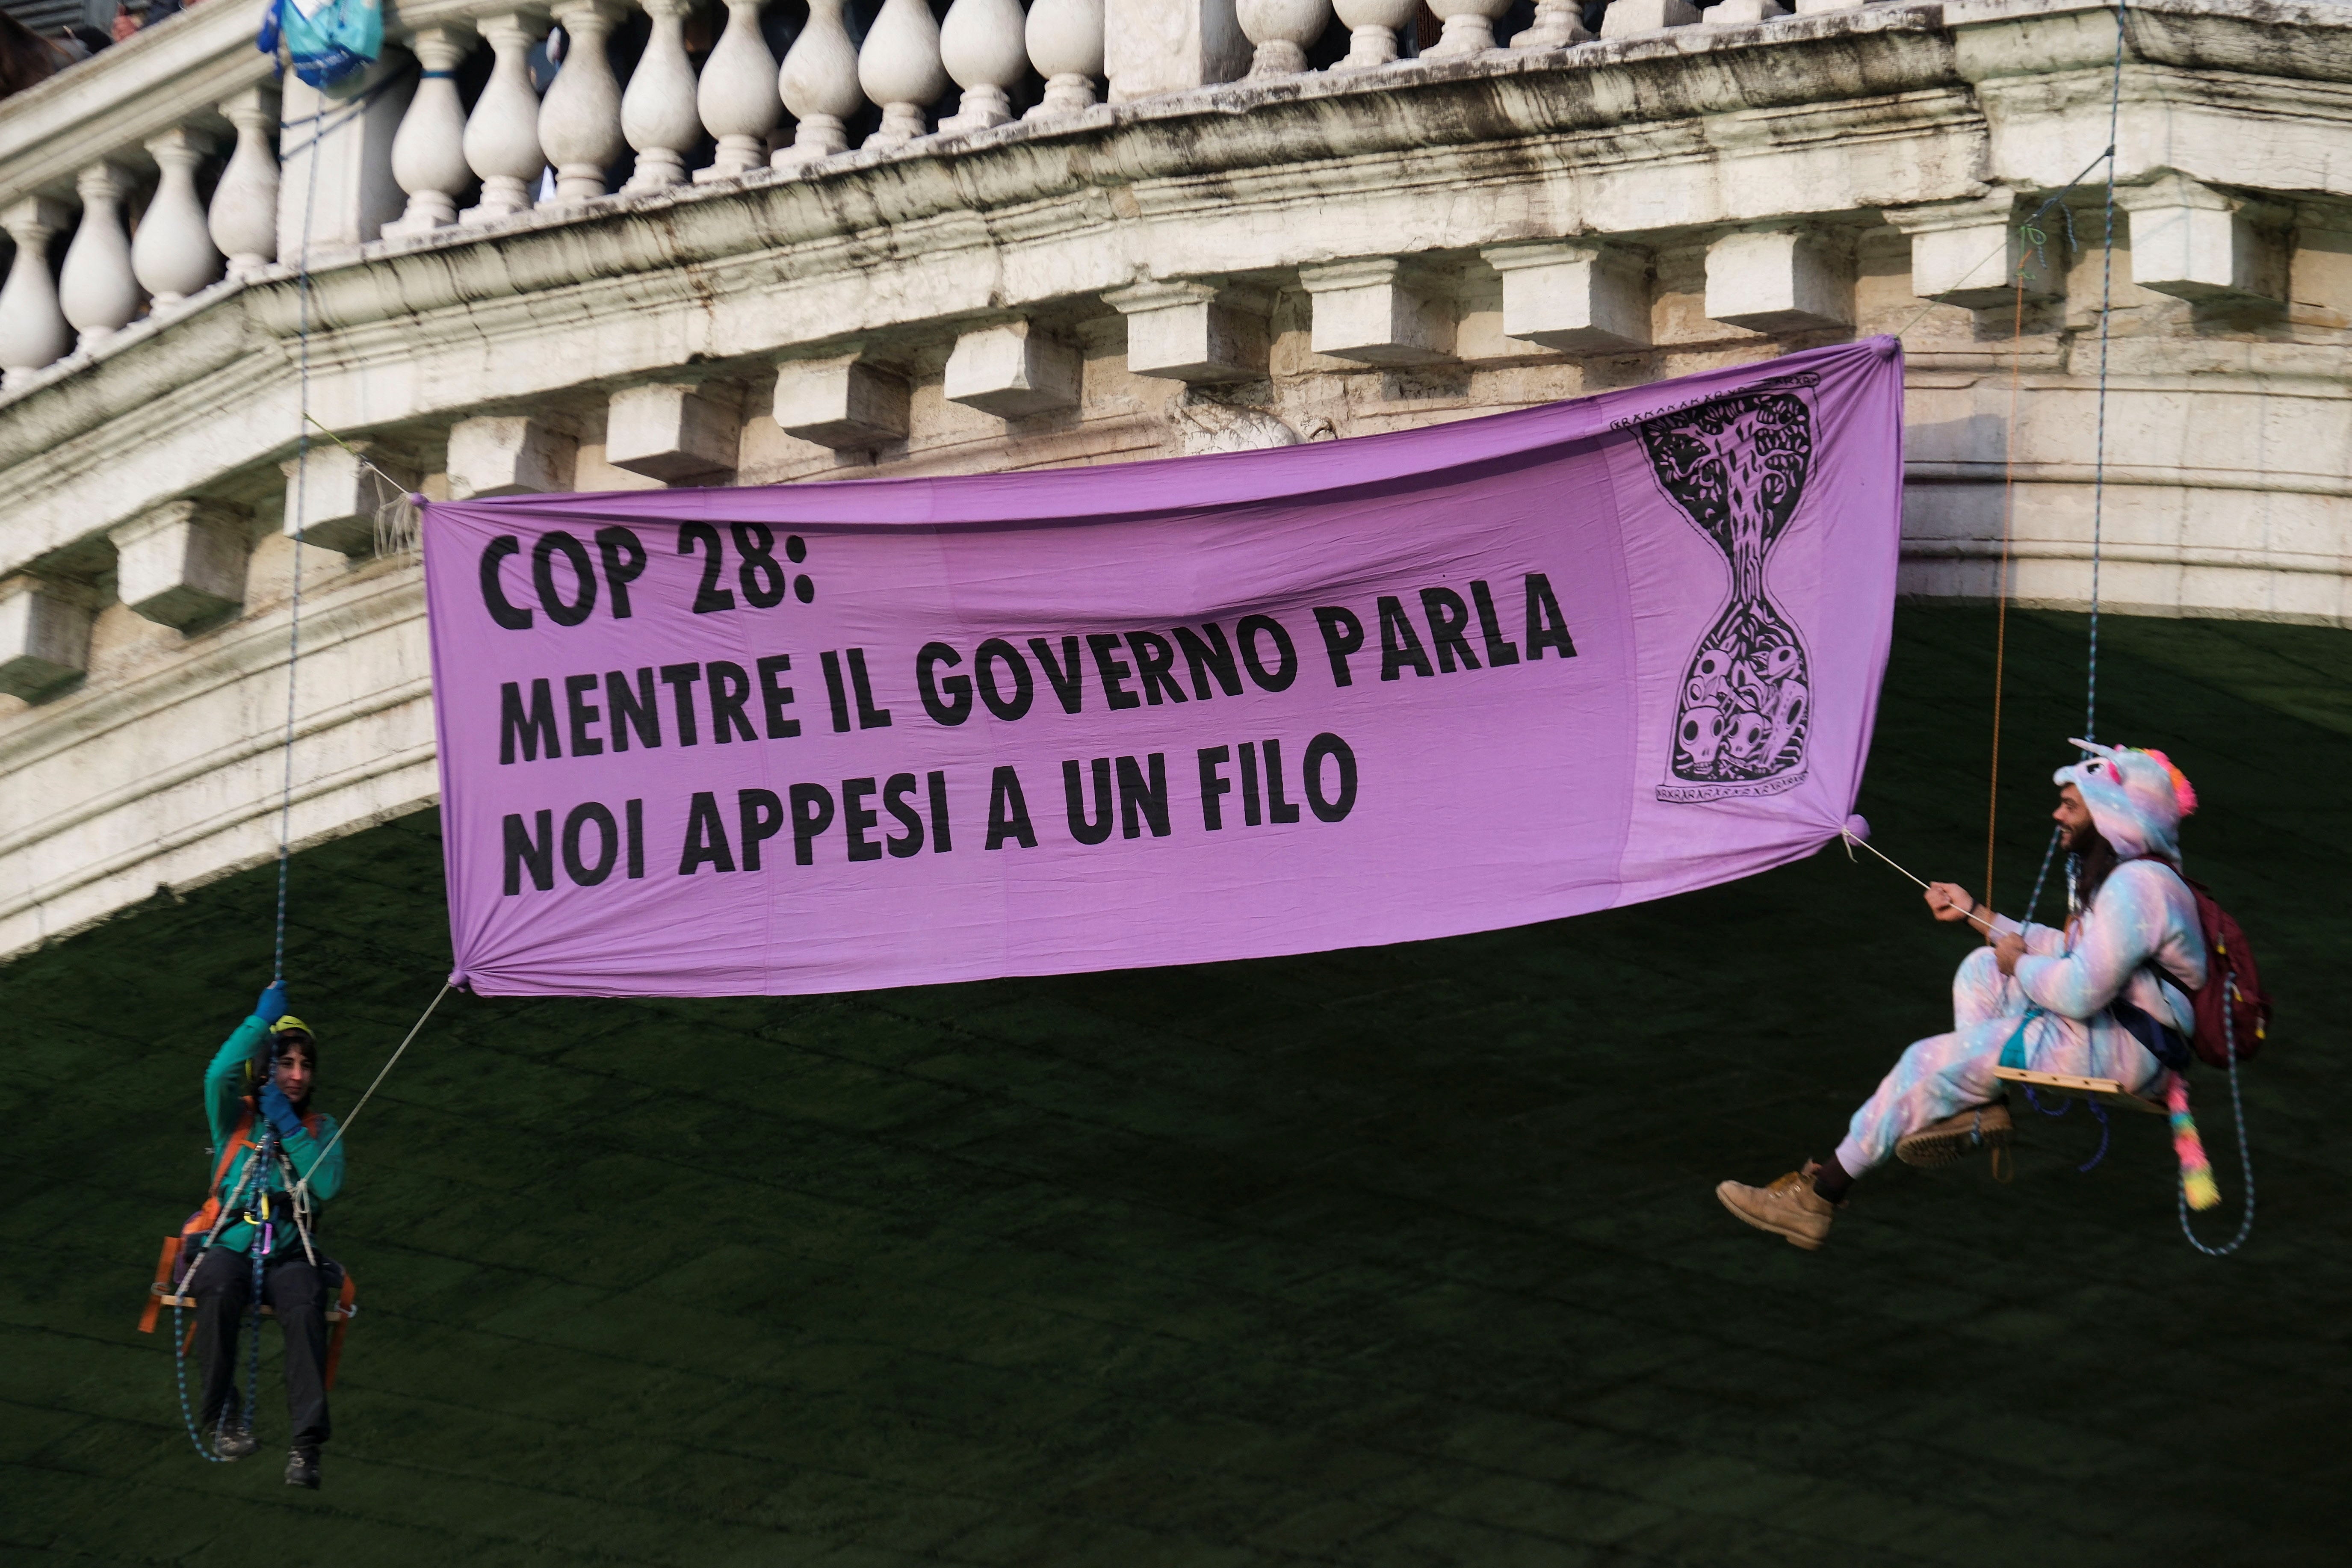 Extinction Rebellion activists dangle from the Rialto Bridge alongside their banner